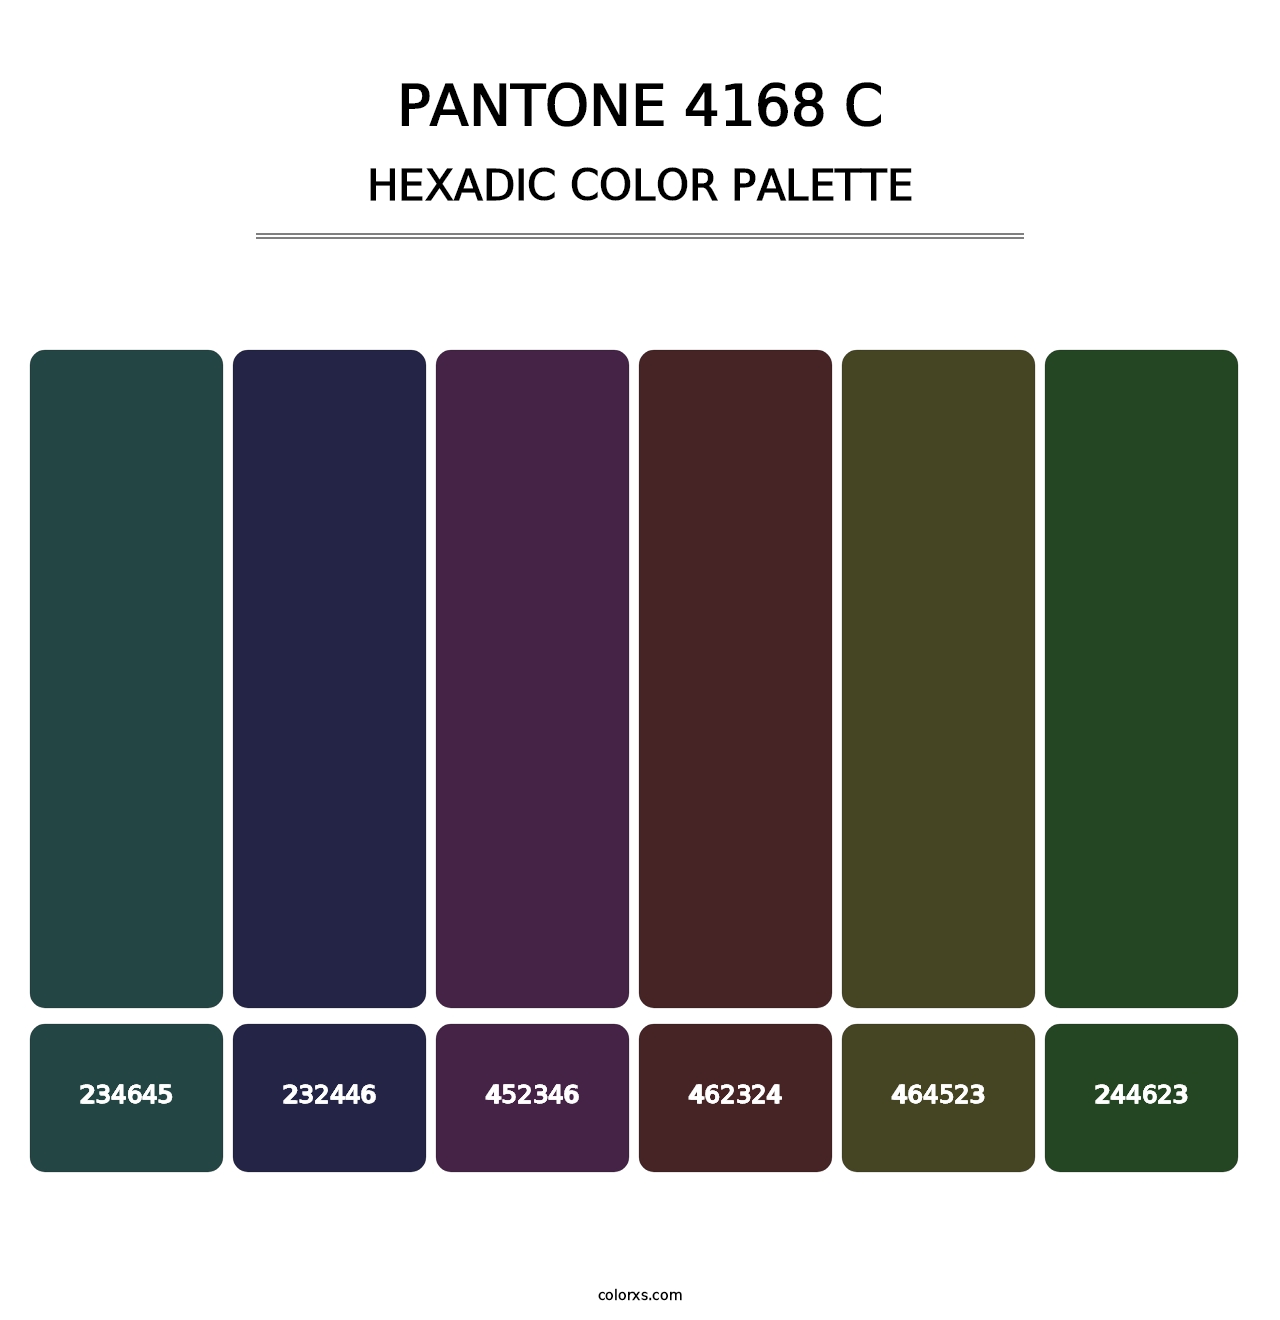 PANTONE 4168 C - Hexadic Color Palette